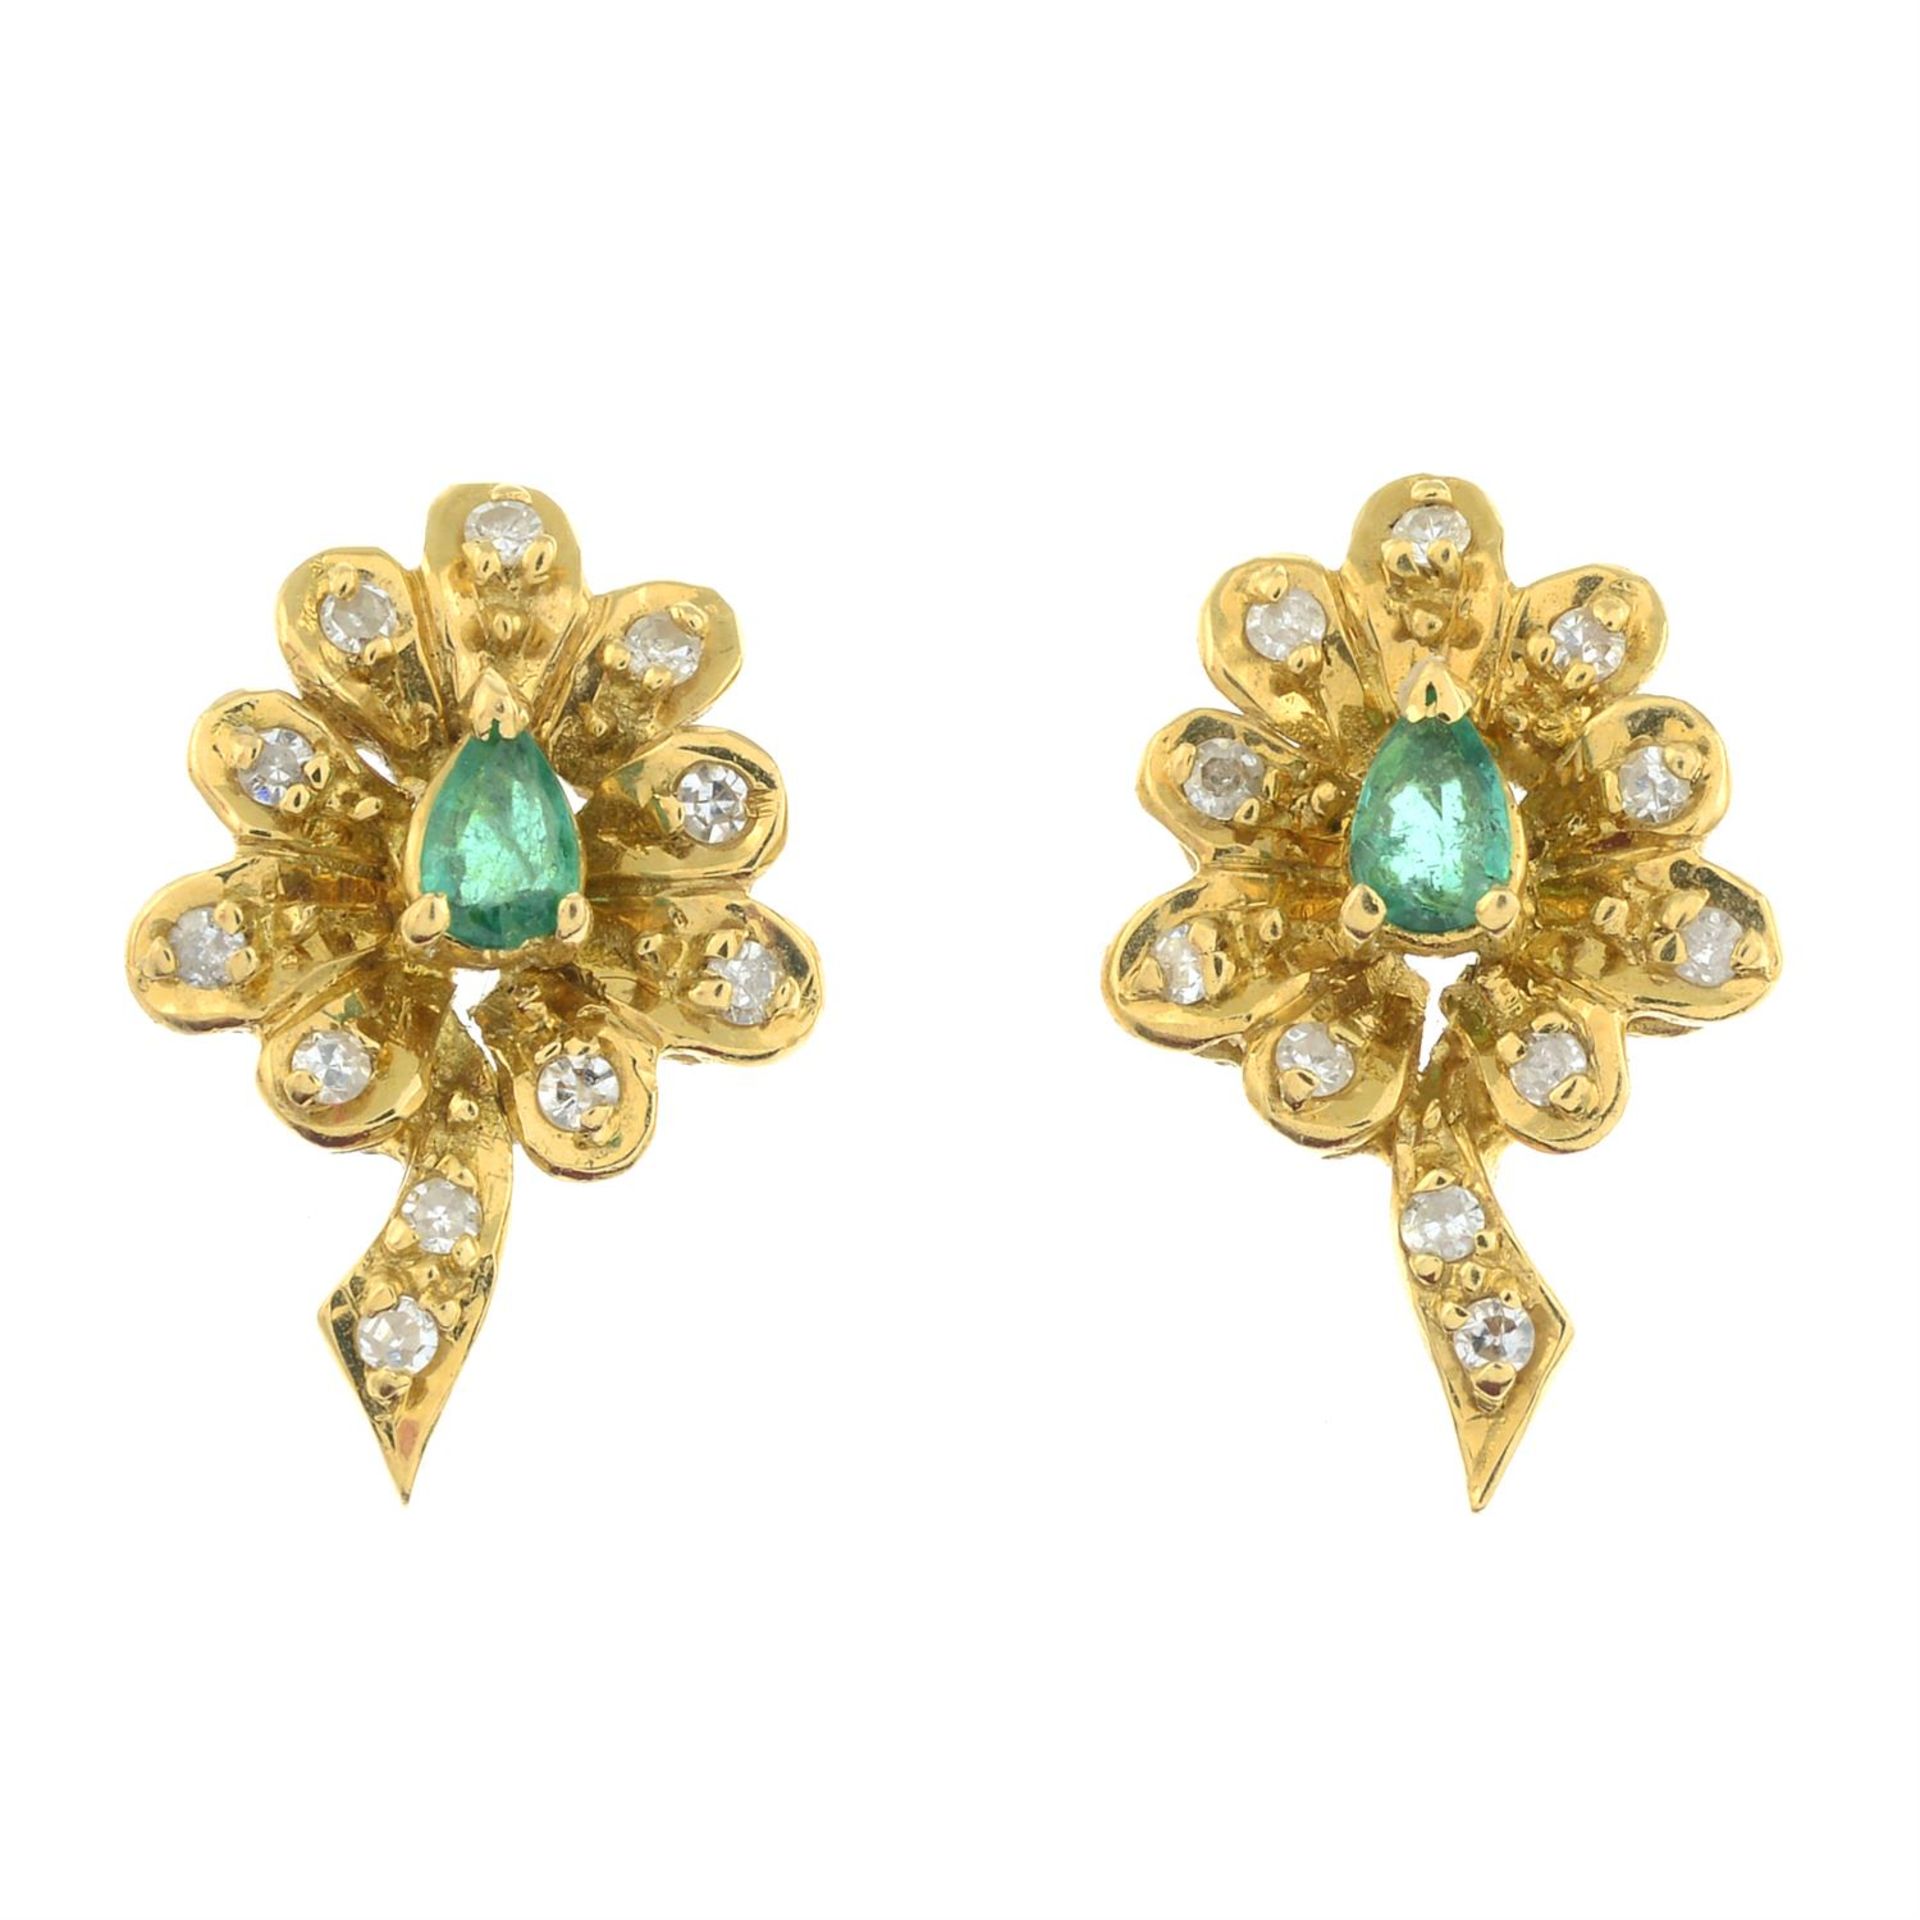 A pair of emerald and single-cut diamond earrings.